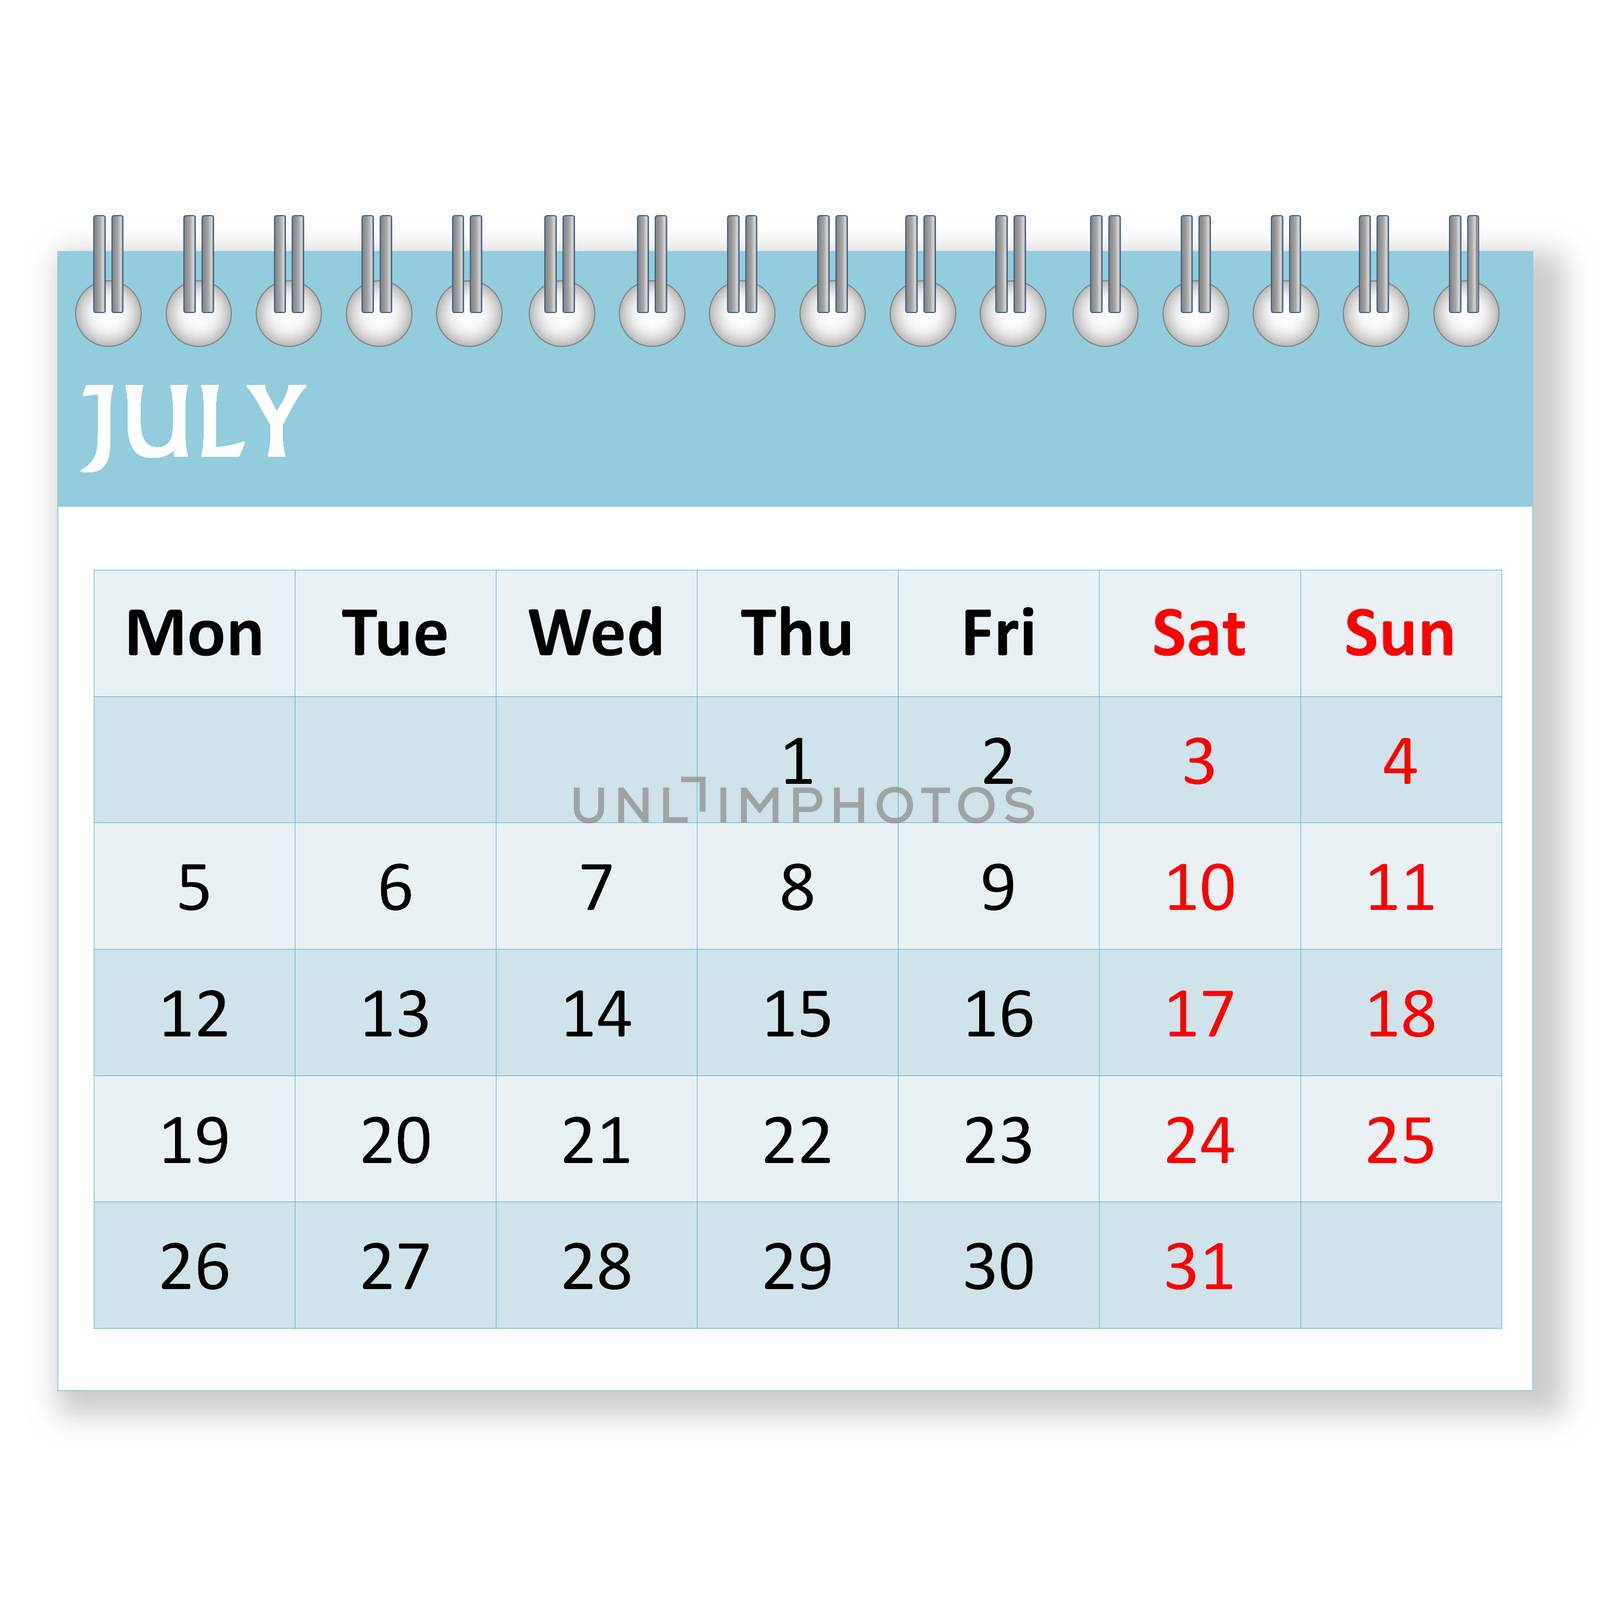 Calendar sheet for july by Elenaphotos21